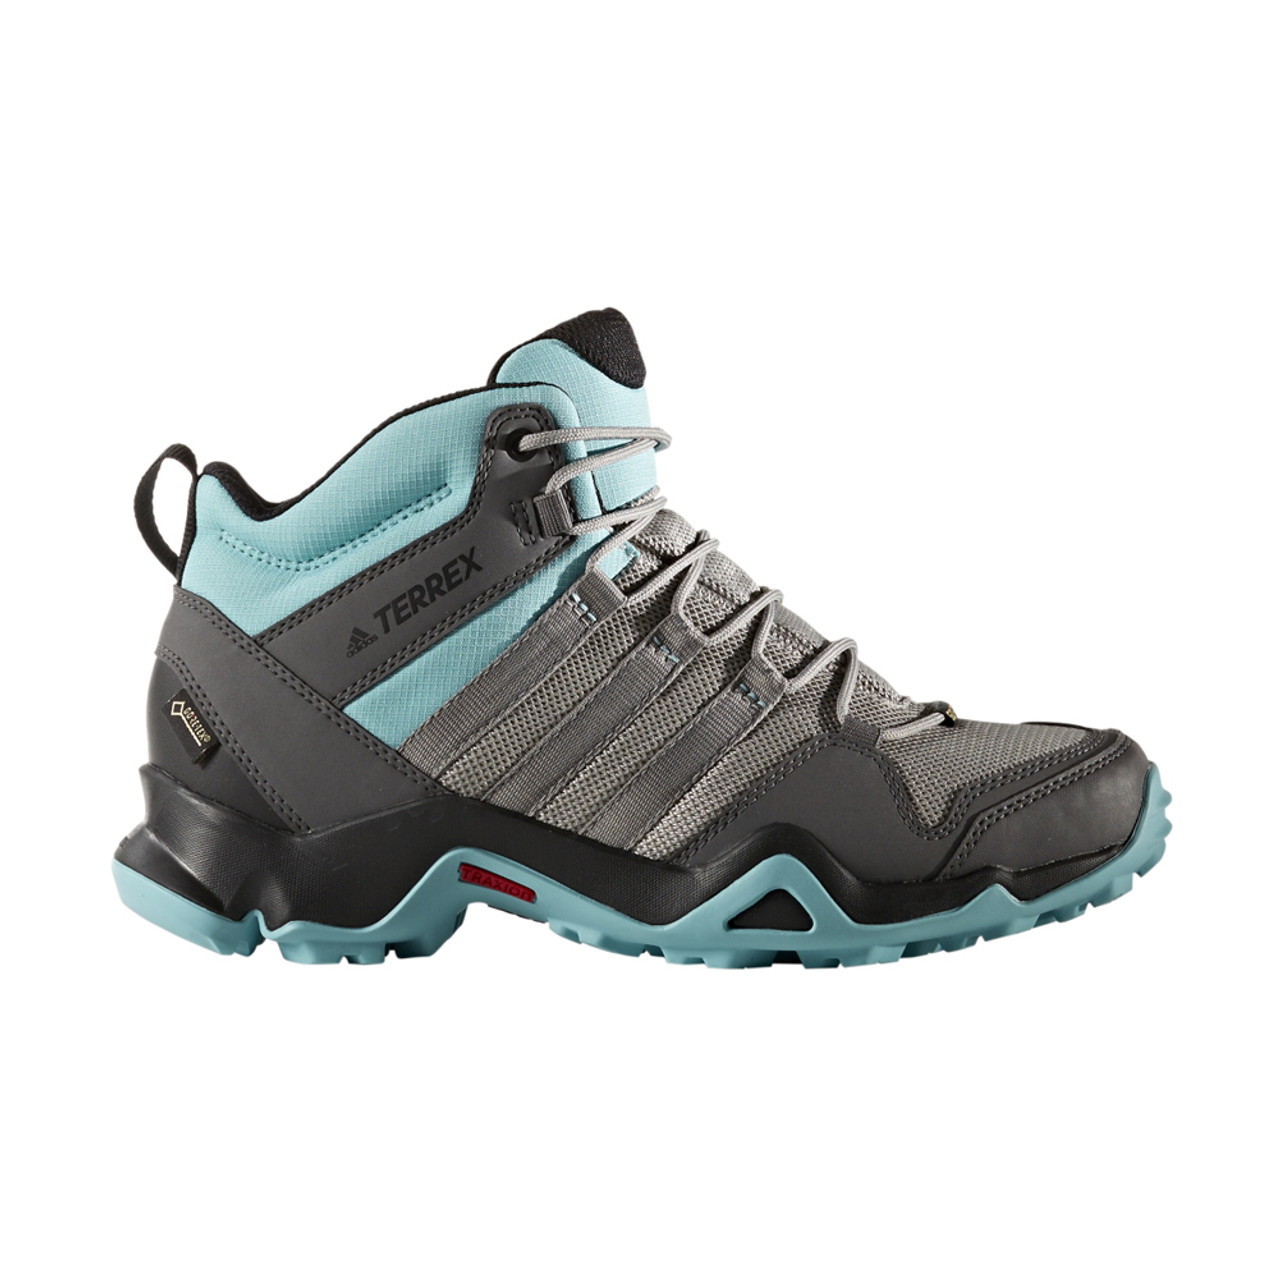 Adidas Terrex AX2R Mid GTX Hiking Boot - Grey | Discount Adidas Ladies Athletic Shoe & More - | Shoolu.com